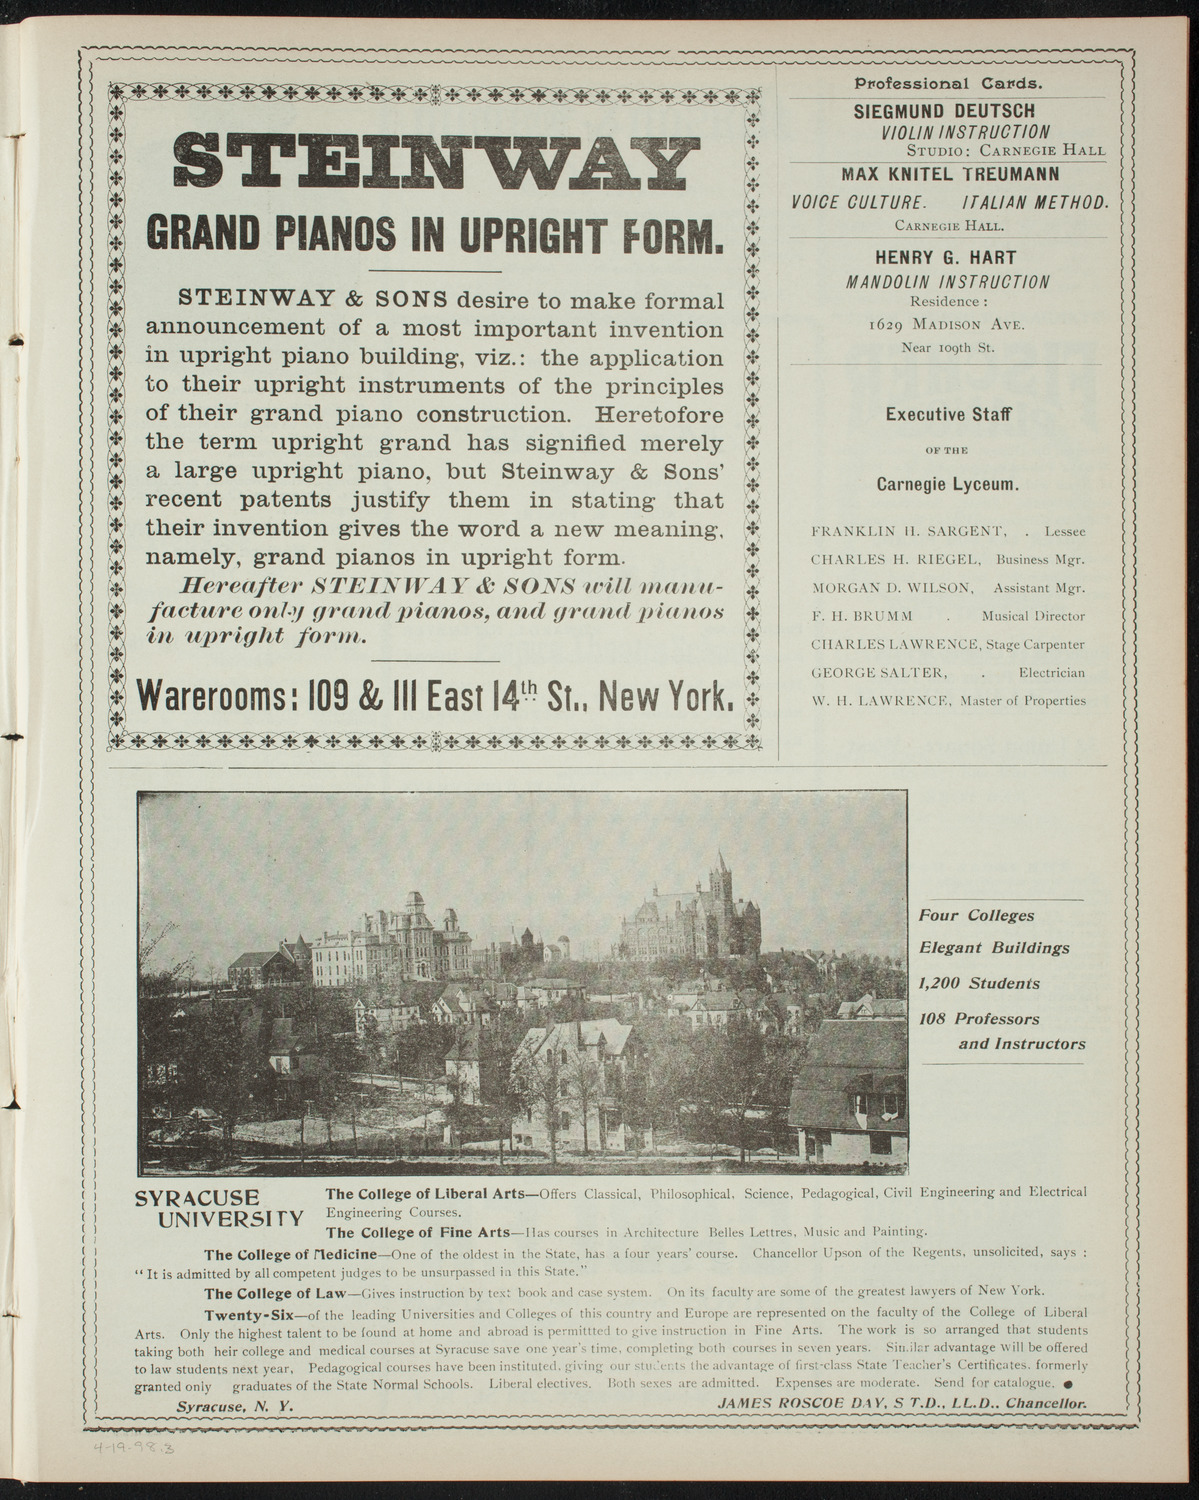 Trinity School Dramatic Club, April 19, 1898, program page 5